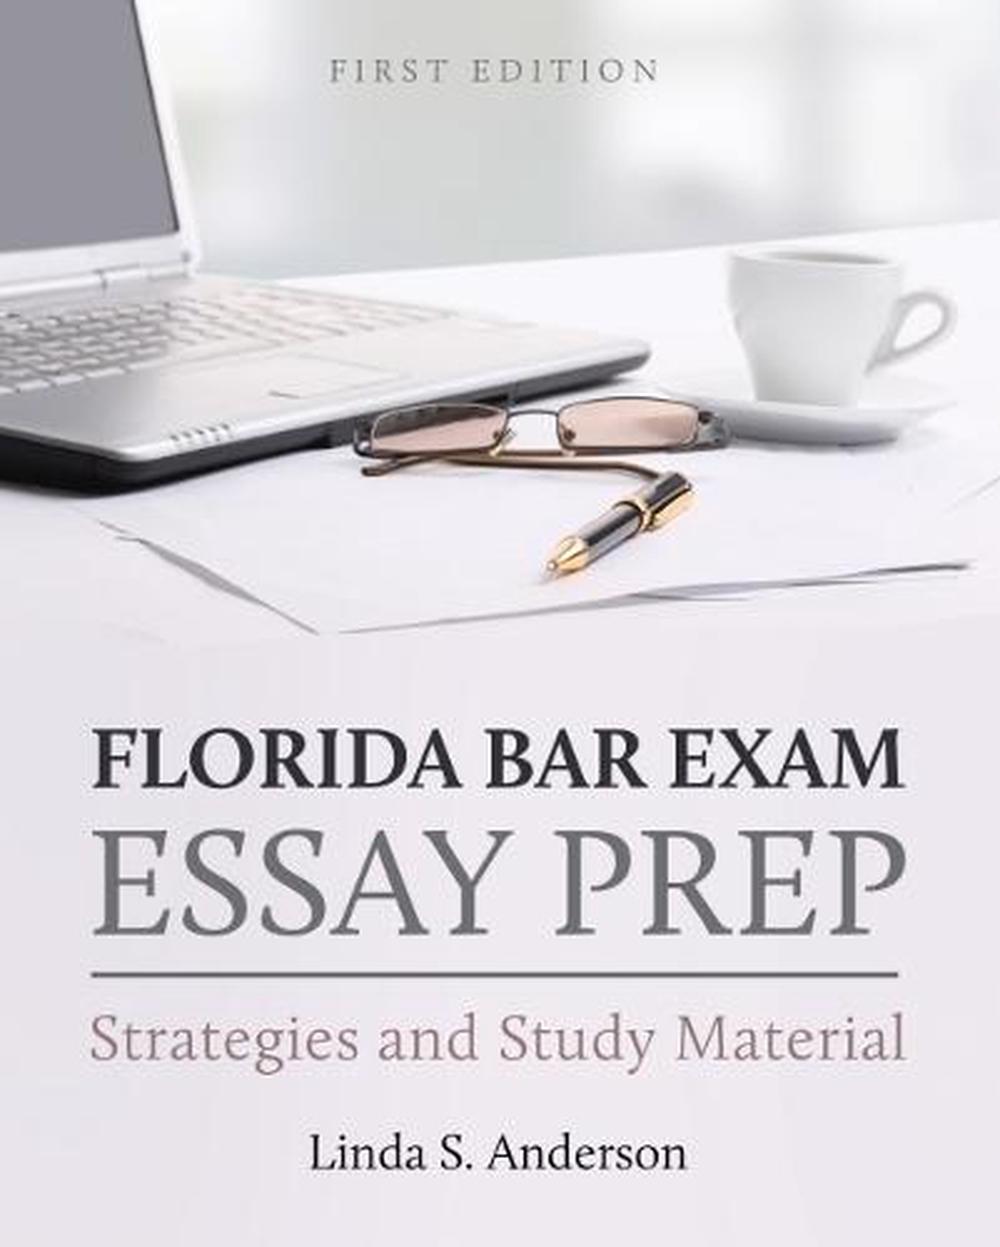 Florida Bar Exam Essay Prep by Linda S. Anderson (English) Paperback